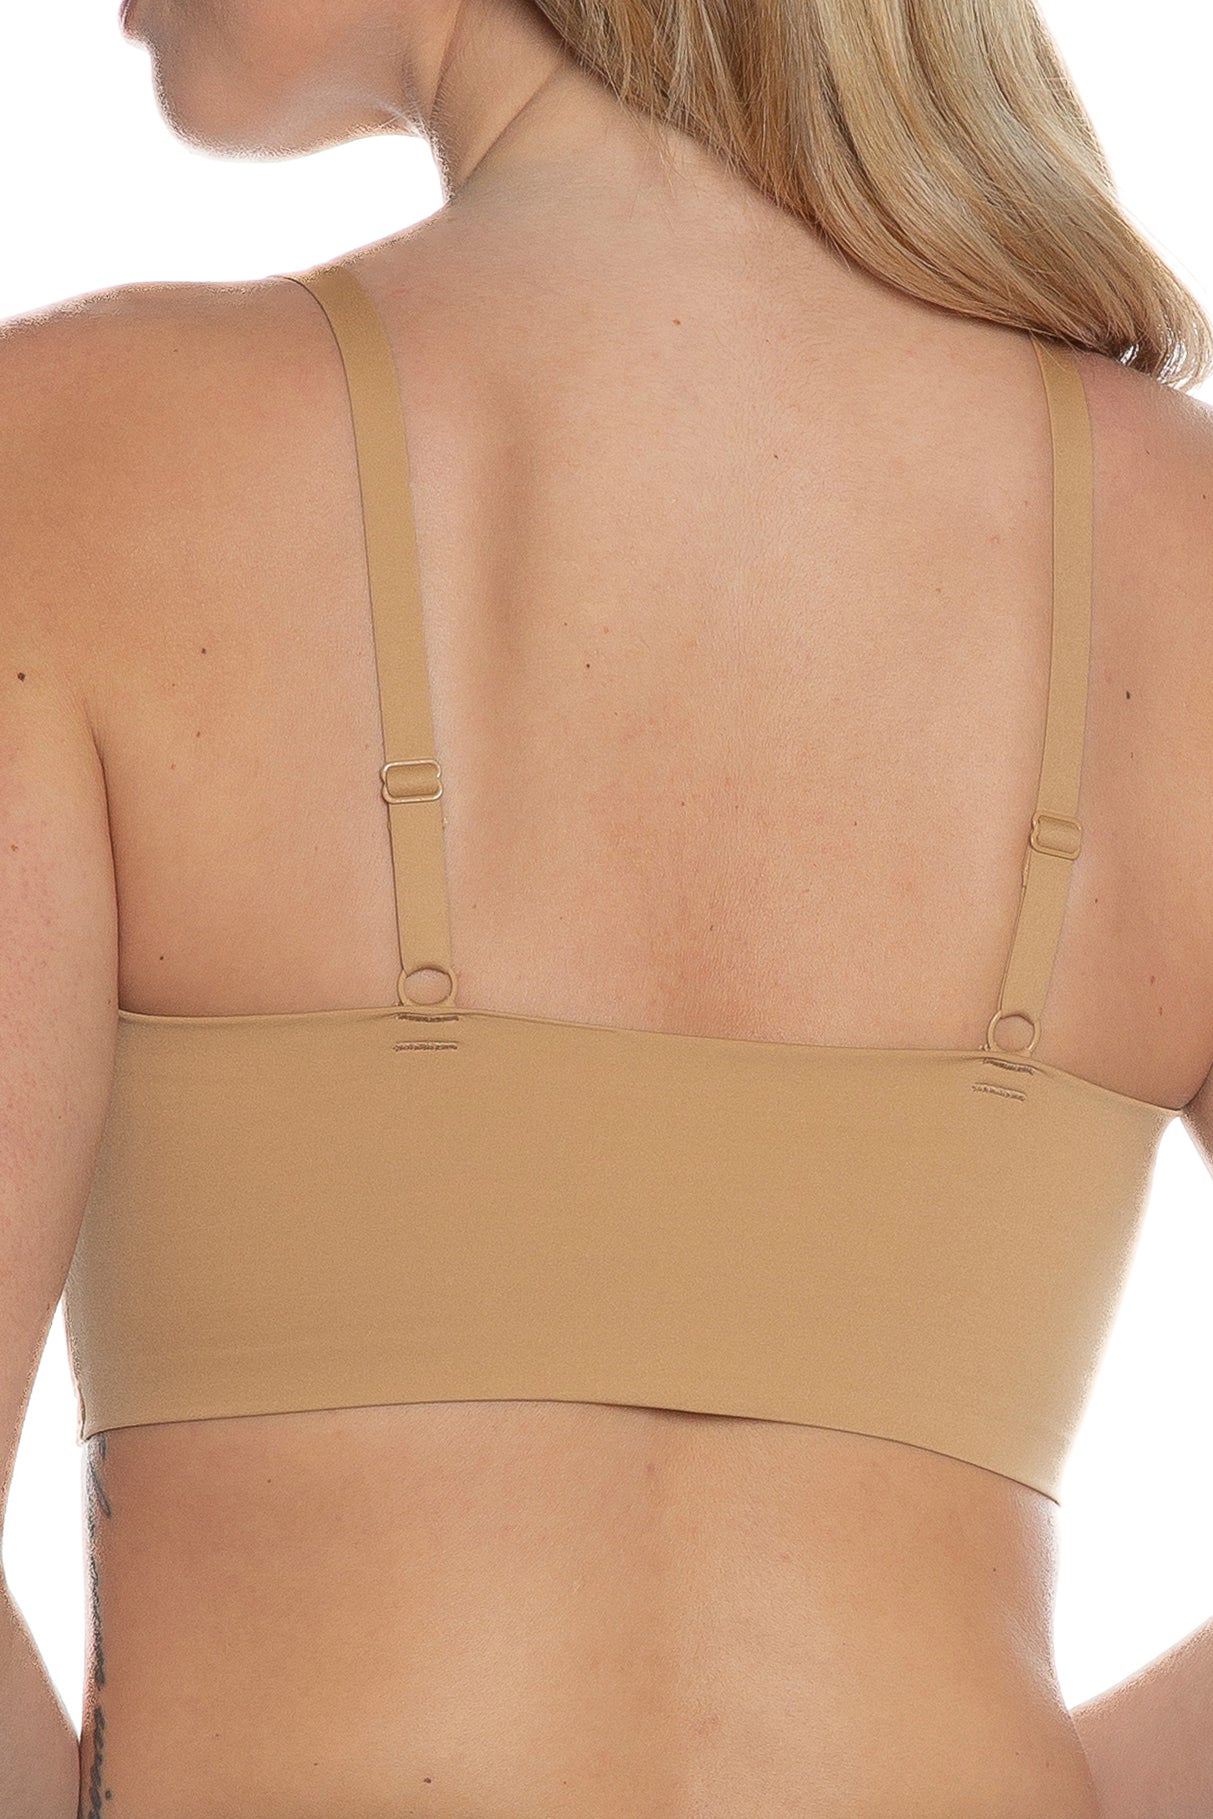 Women's Rhonda Shear 1699 Gel Wireless Bra with No Back Closure (White XL)